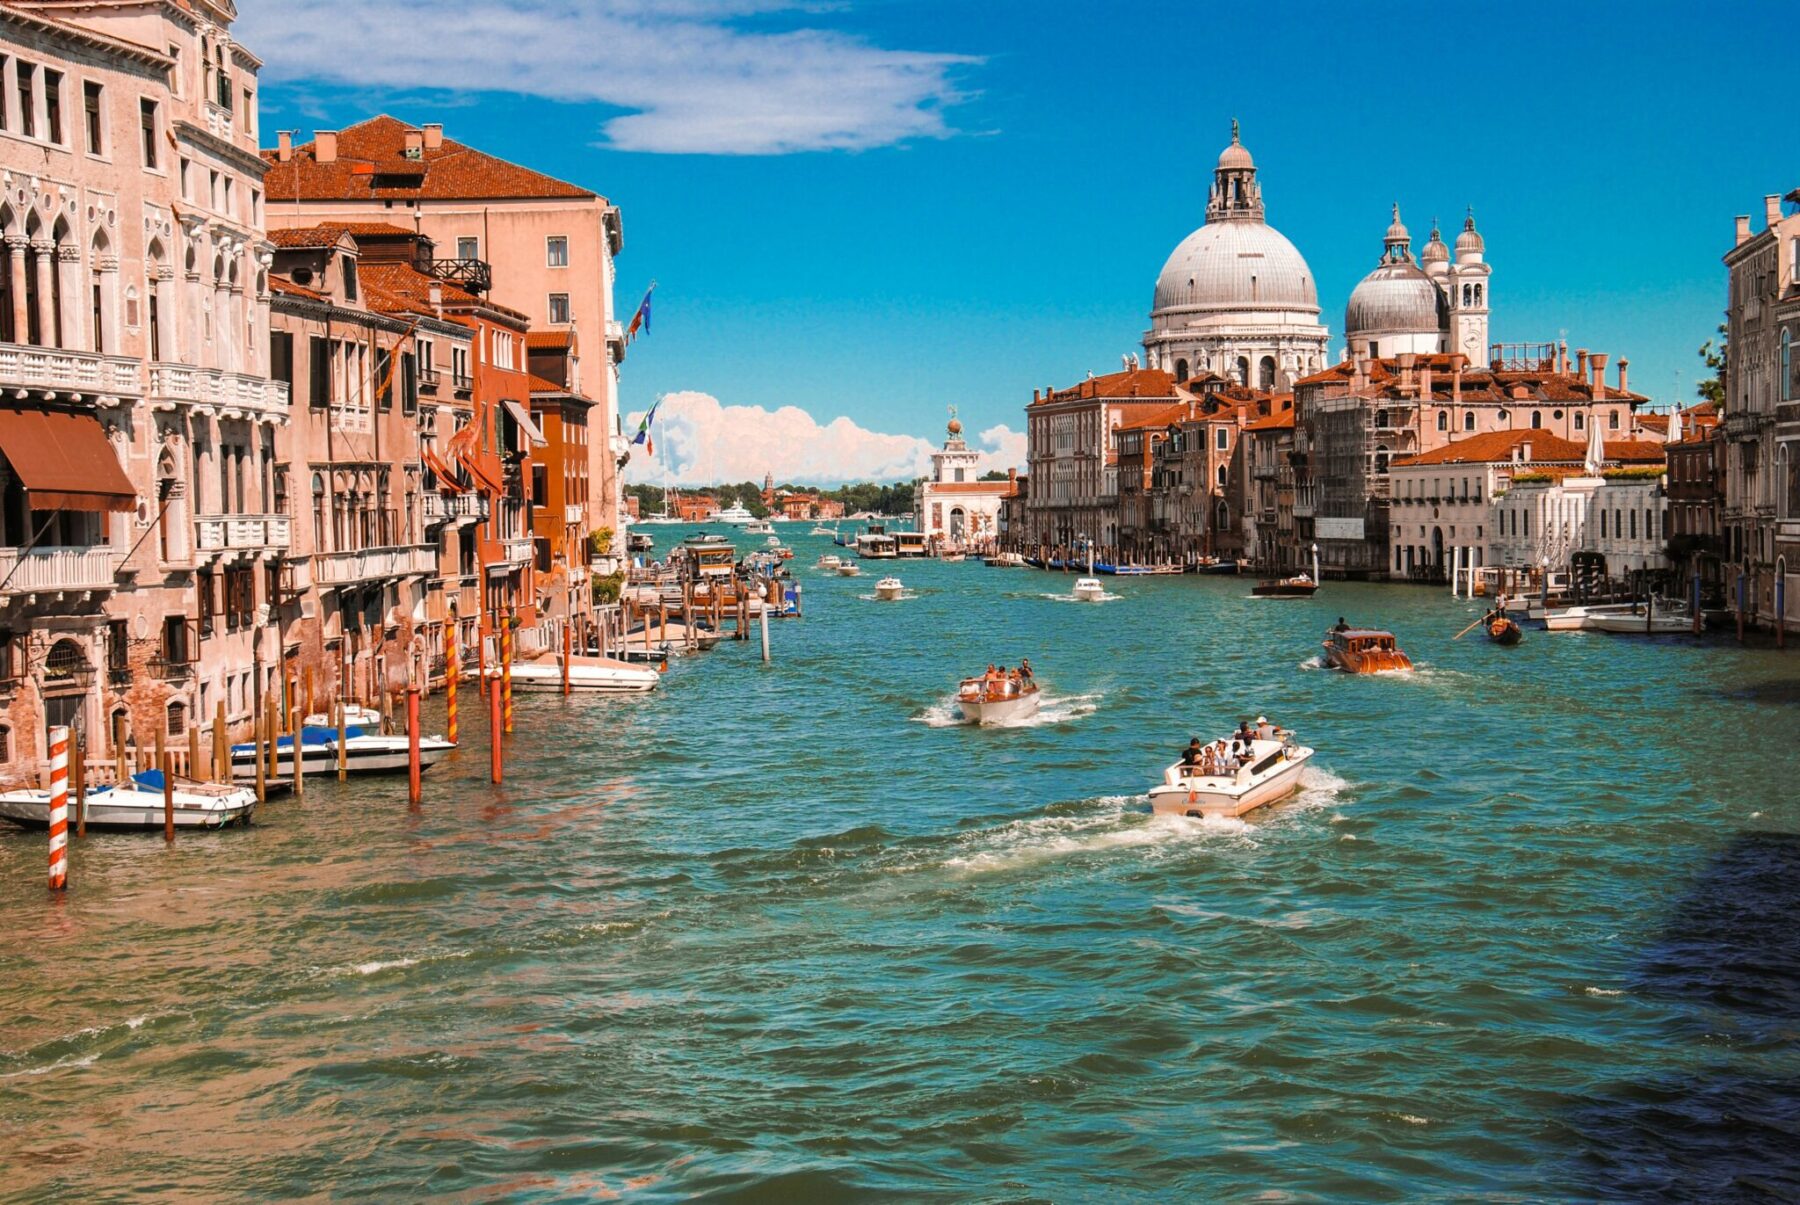 Venice Grand Canal, Italy. Dan Novac on Unsplash